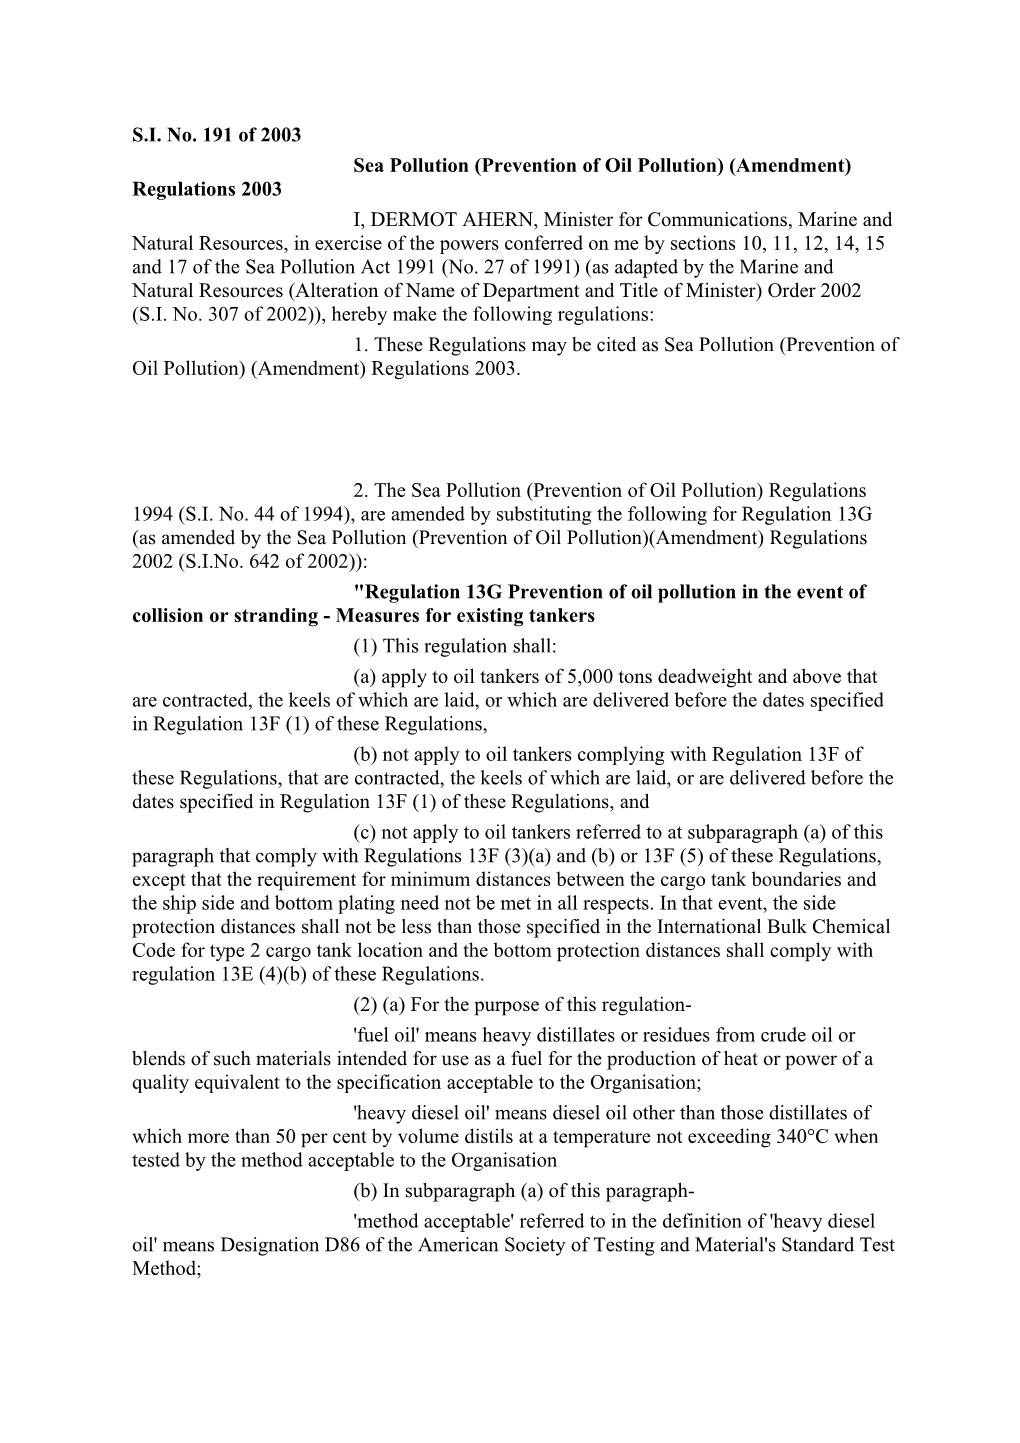 Sea Pollution (Prevention of Oil Pollution) (Amendment) Regulations 2003